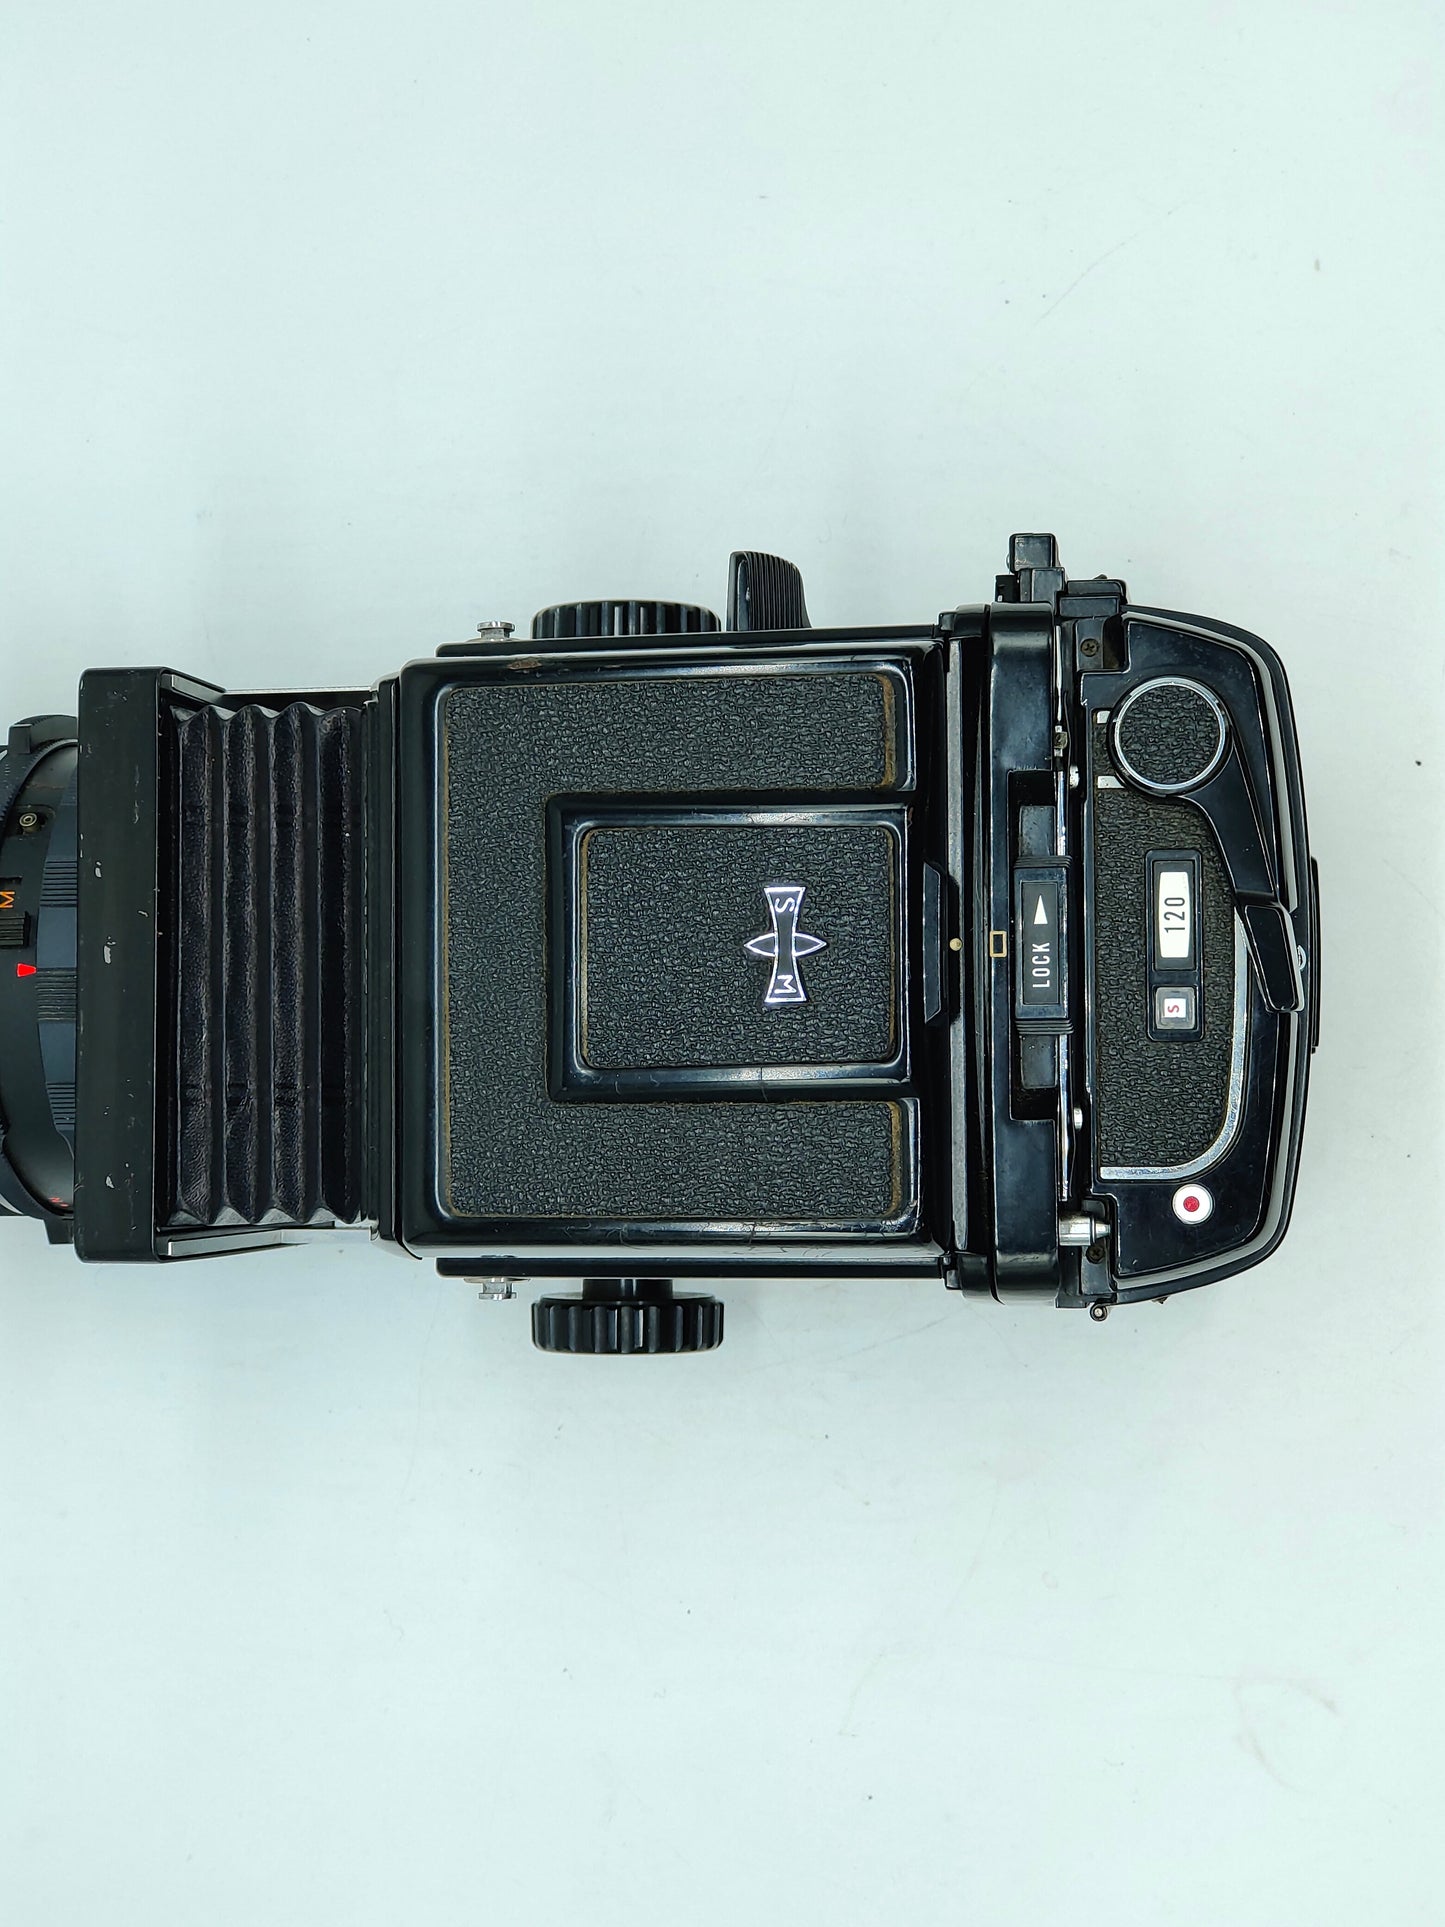 Mamiya RB67 Professional film camera